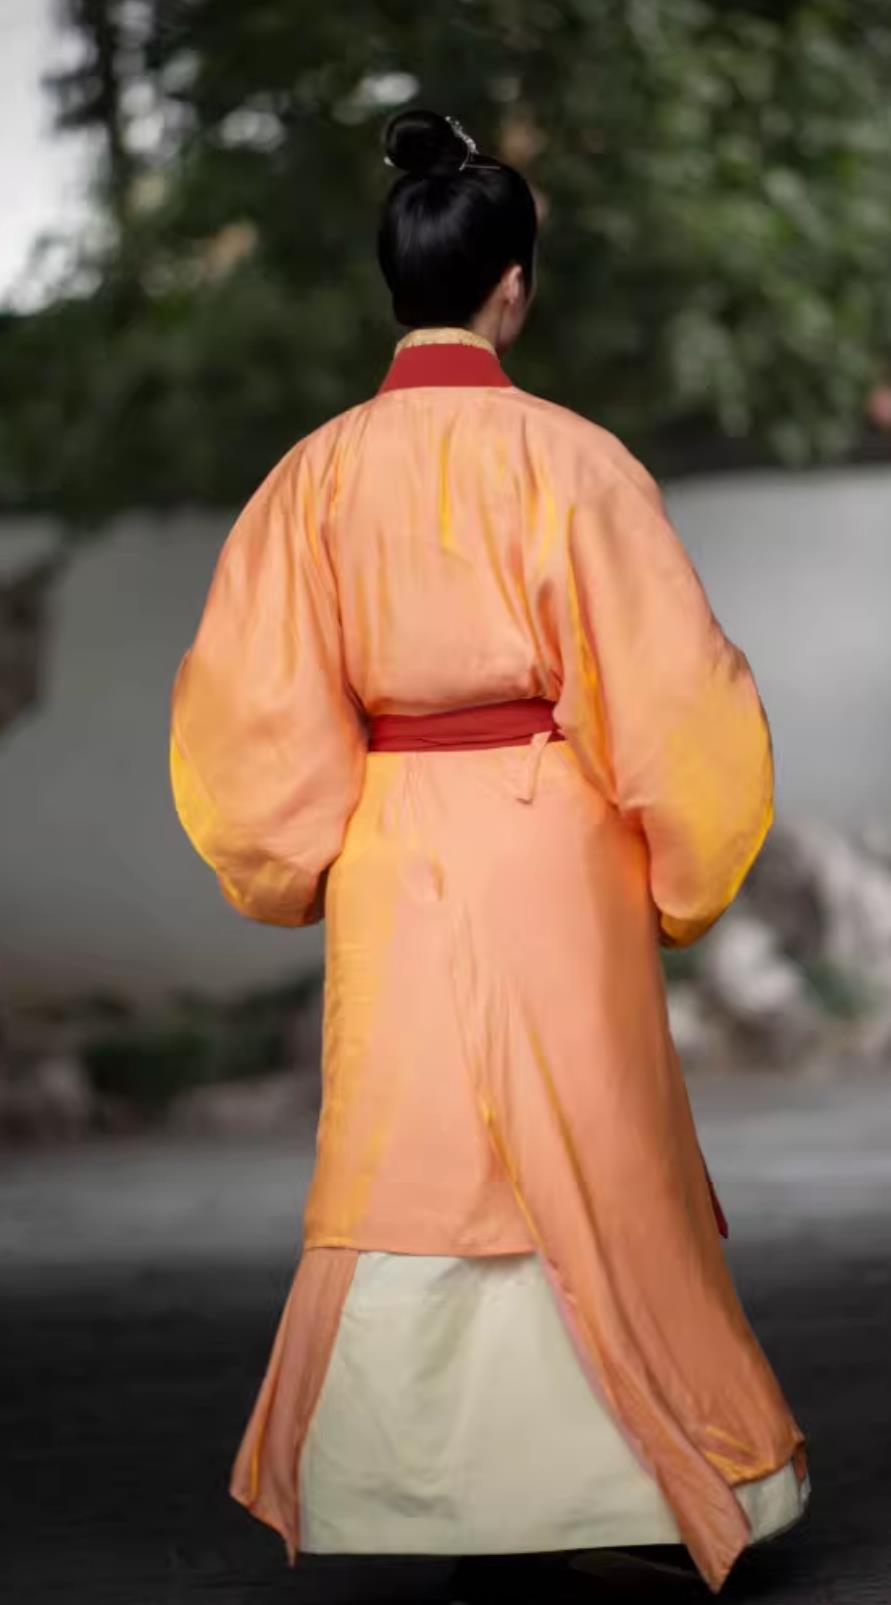 China Travel Photography Scholar Costume Traditional Orange Hanfu Robe Ancient China Young Childe Clothing